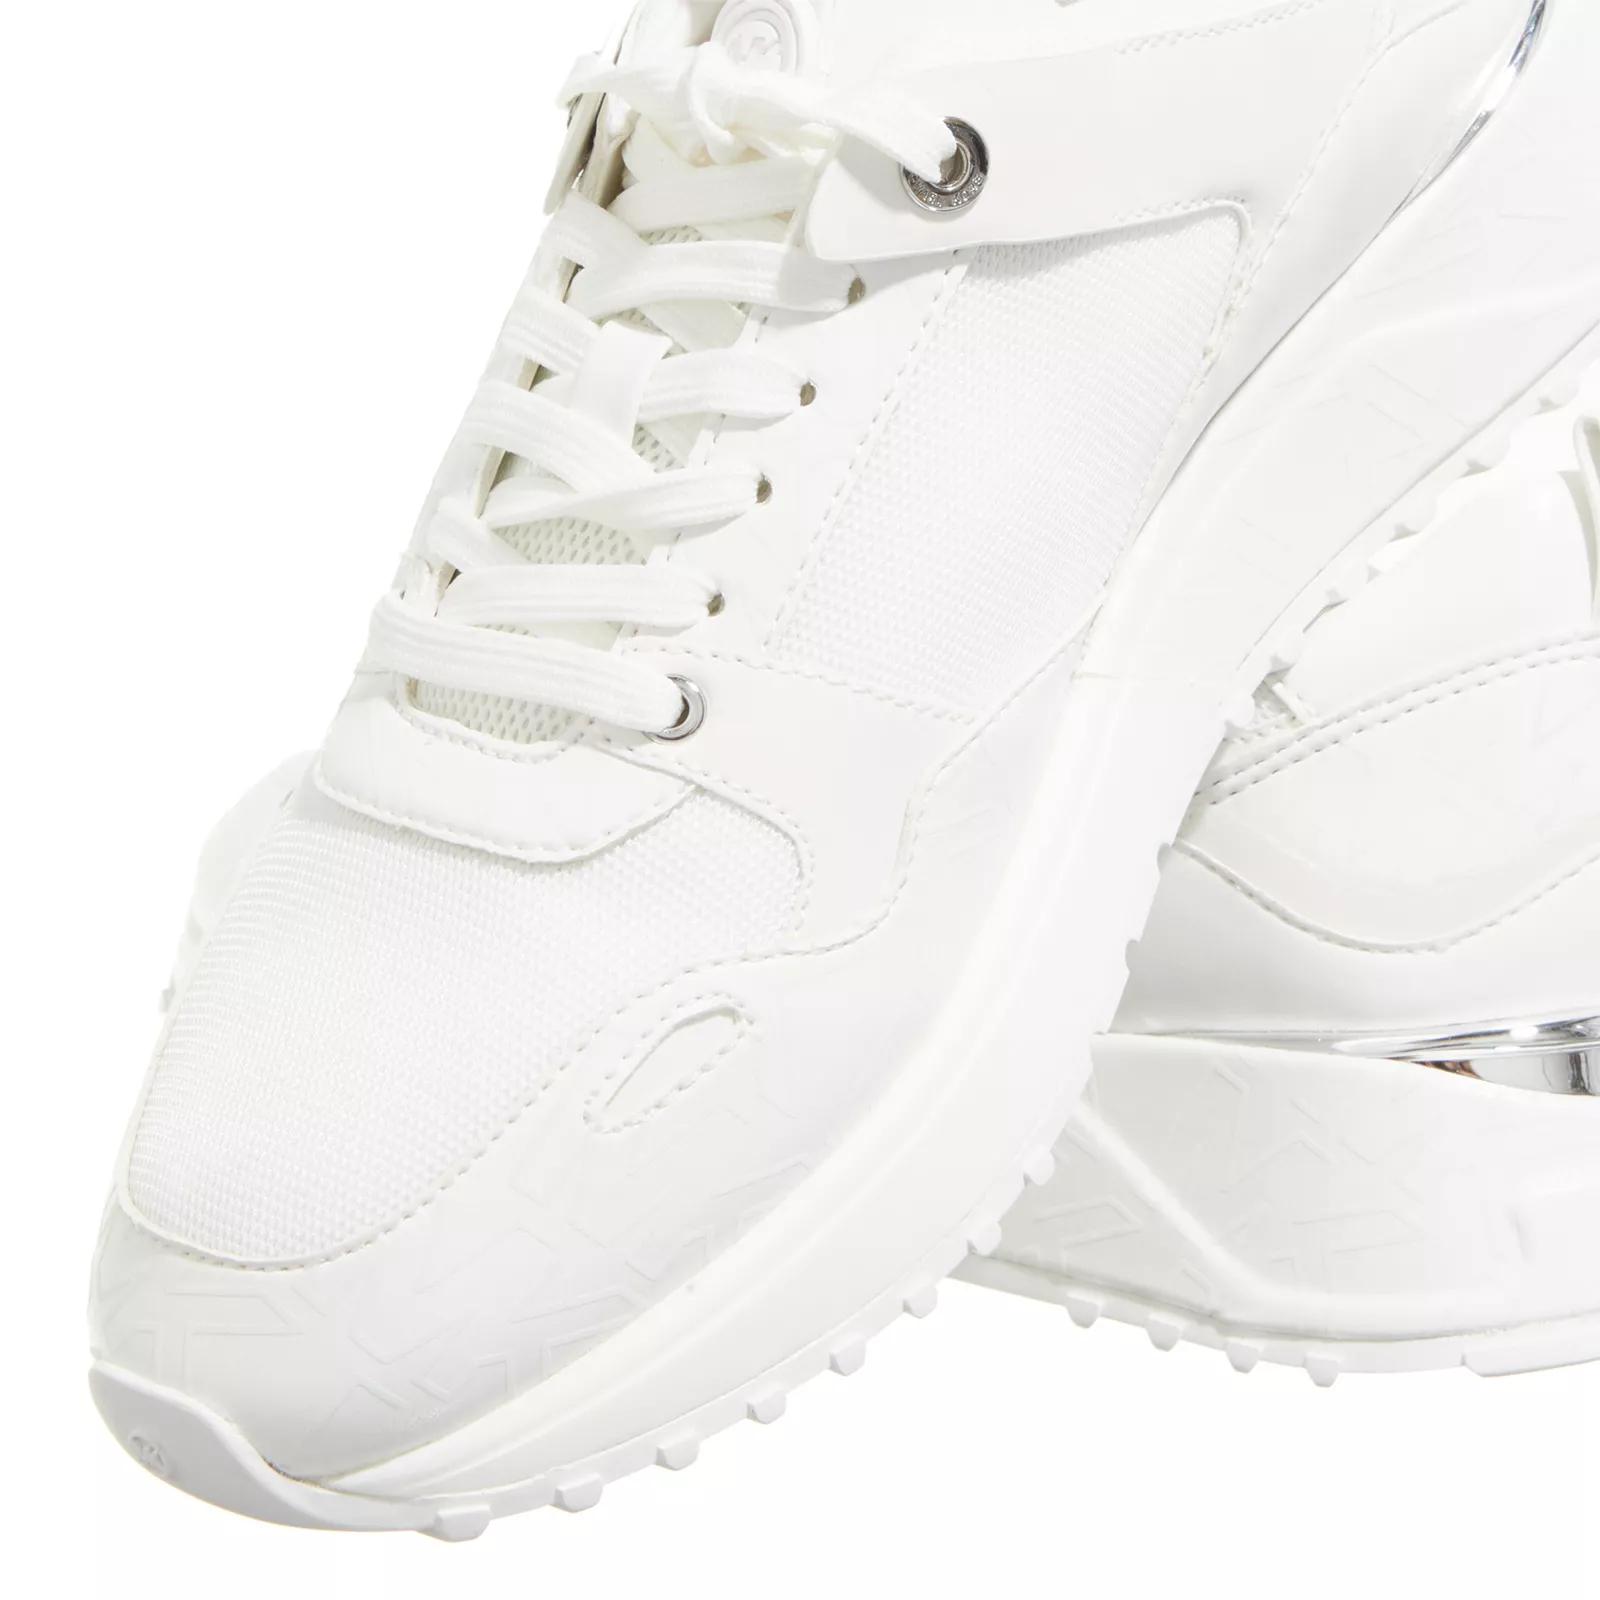 Michael Kors Sneakers - Theo Trainer - Gr. 37 (EU) - in Weiß - für Damen von Michael Kors